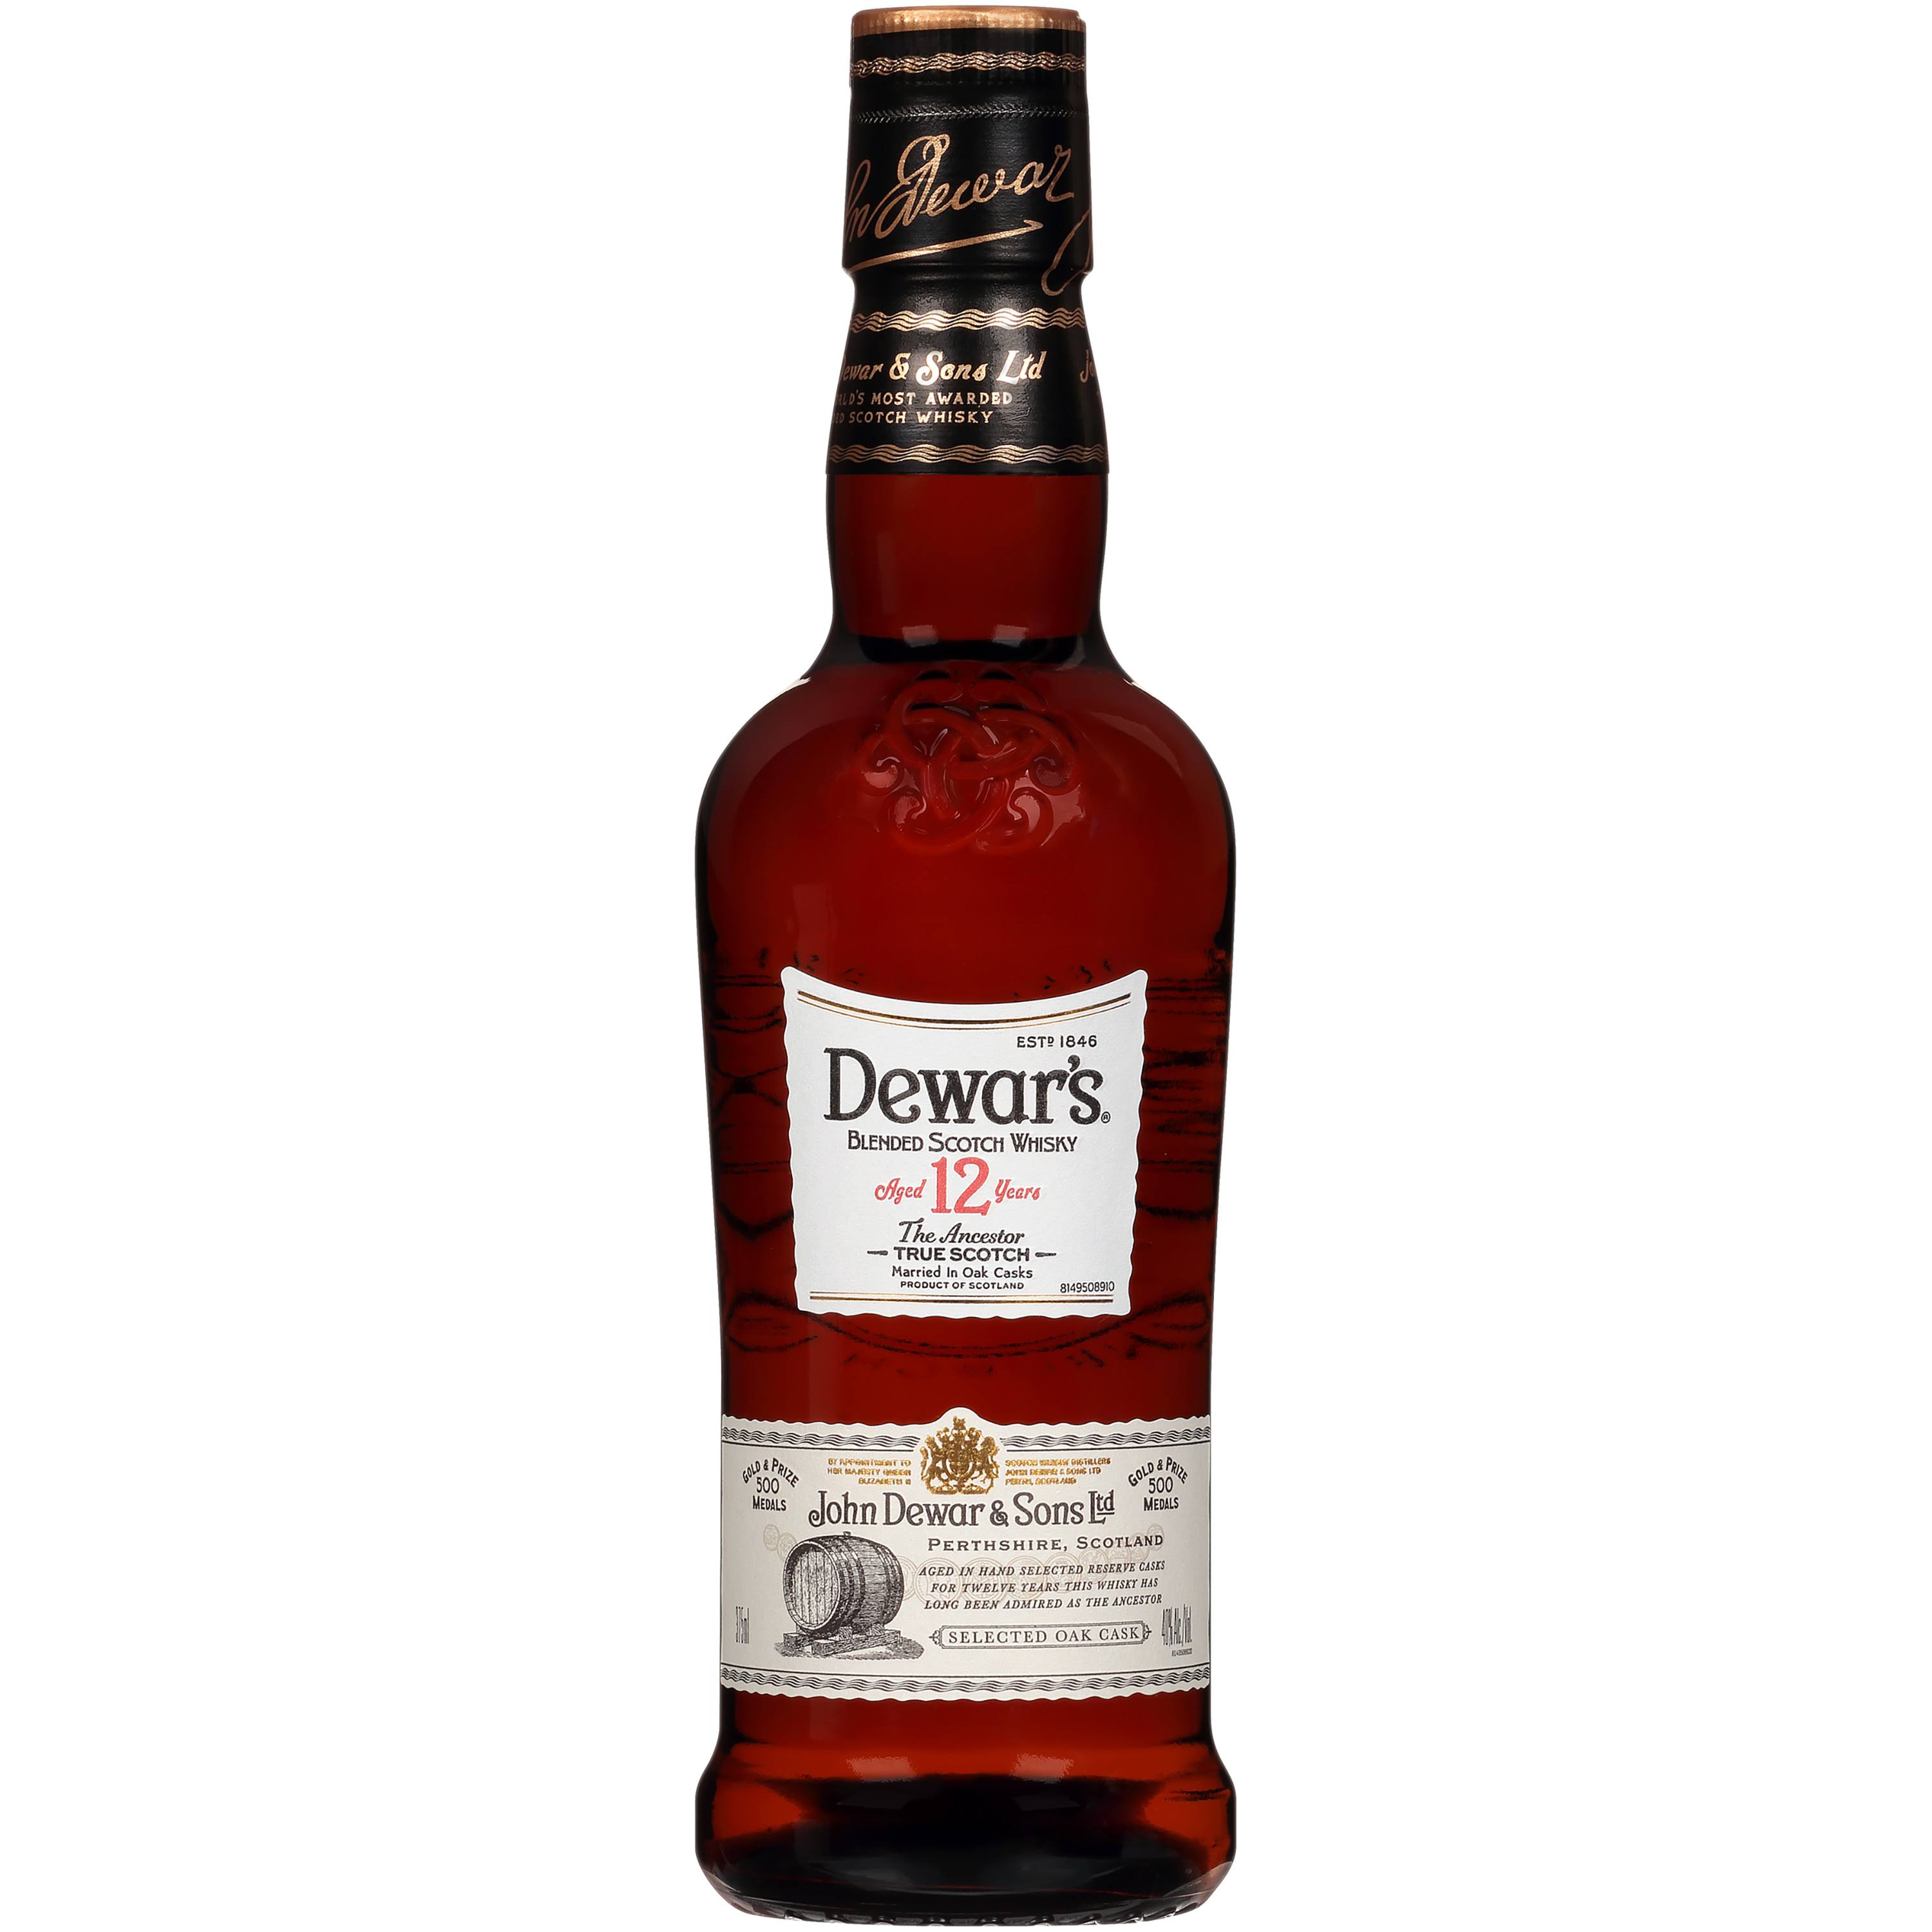 Dewar's Special Reserve Finest Scotch Whisky - 375ml